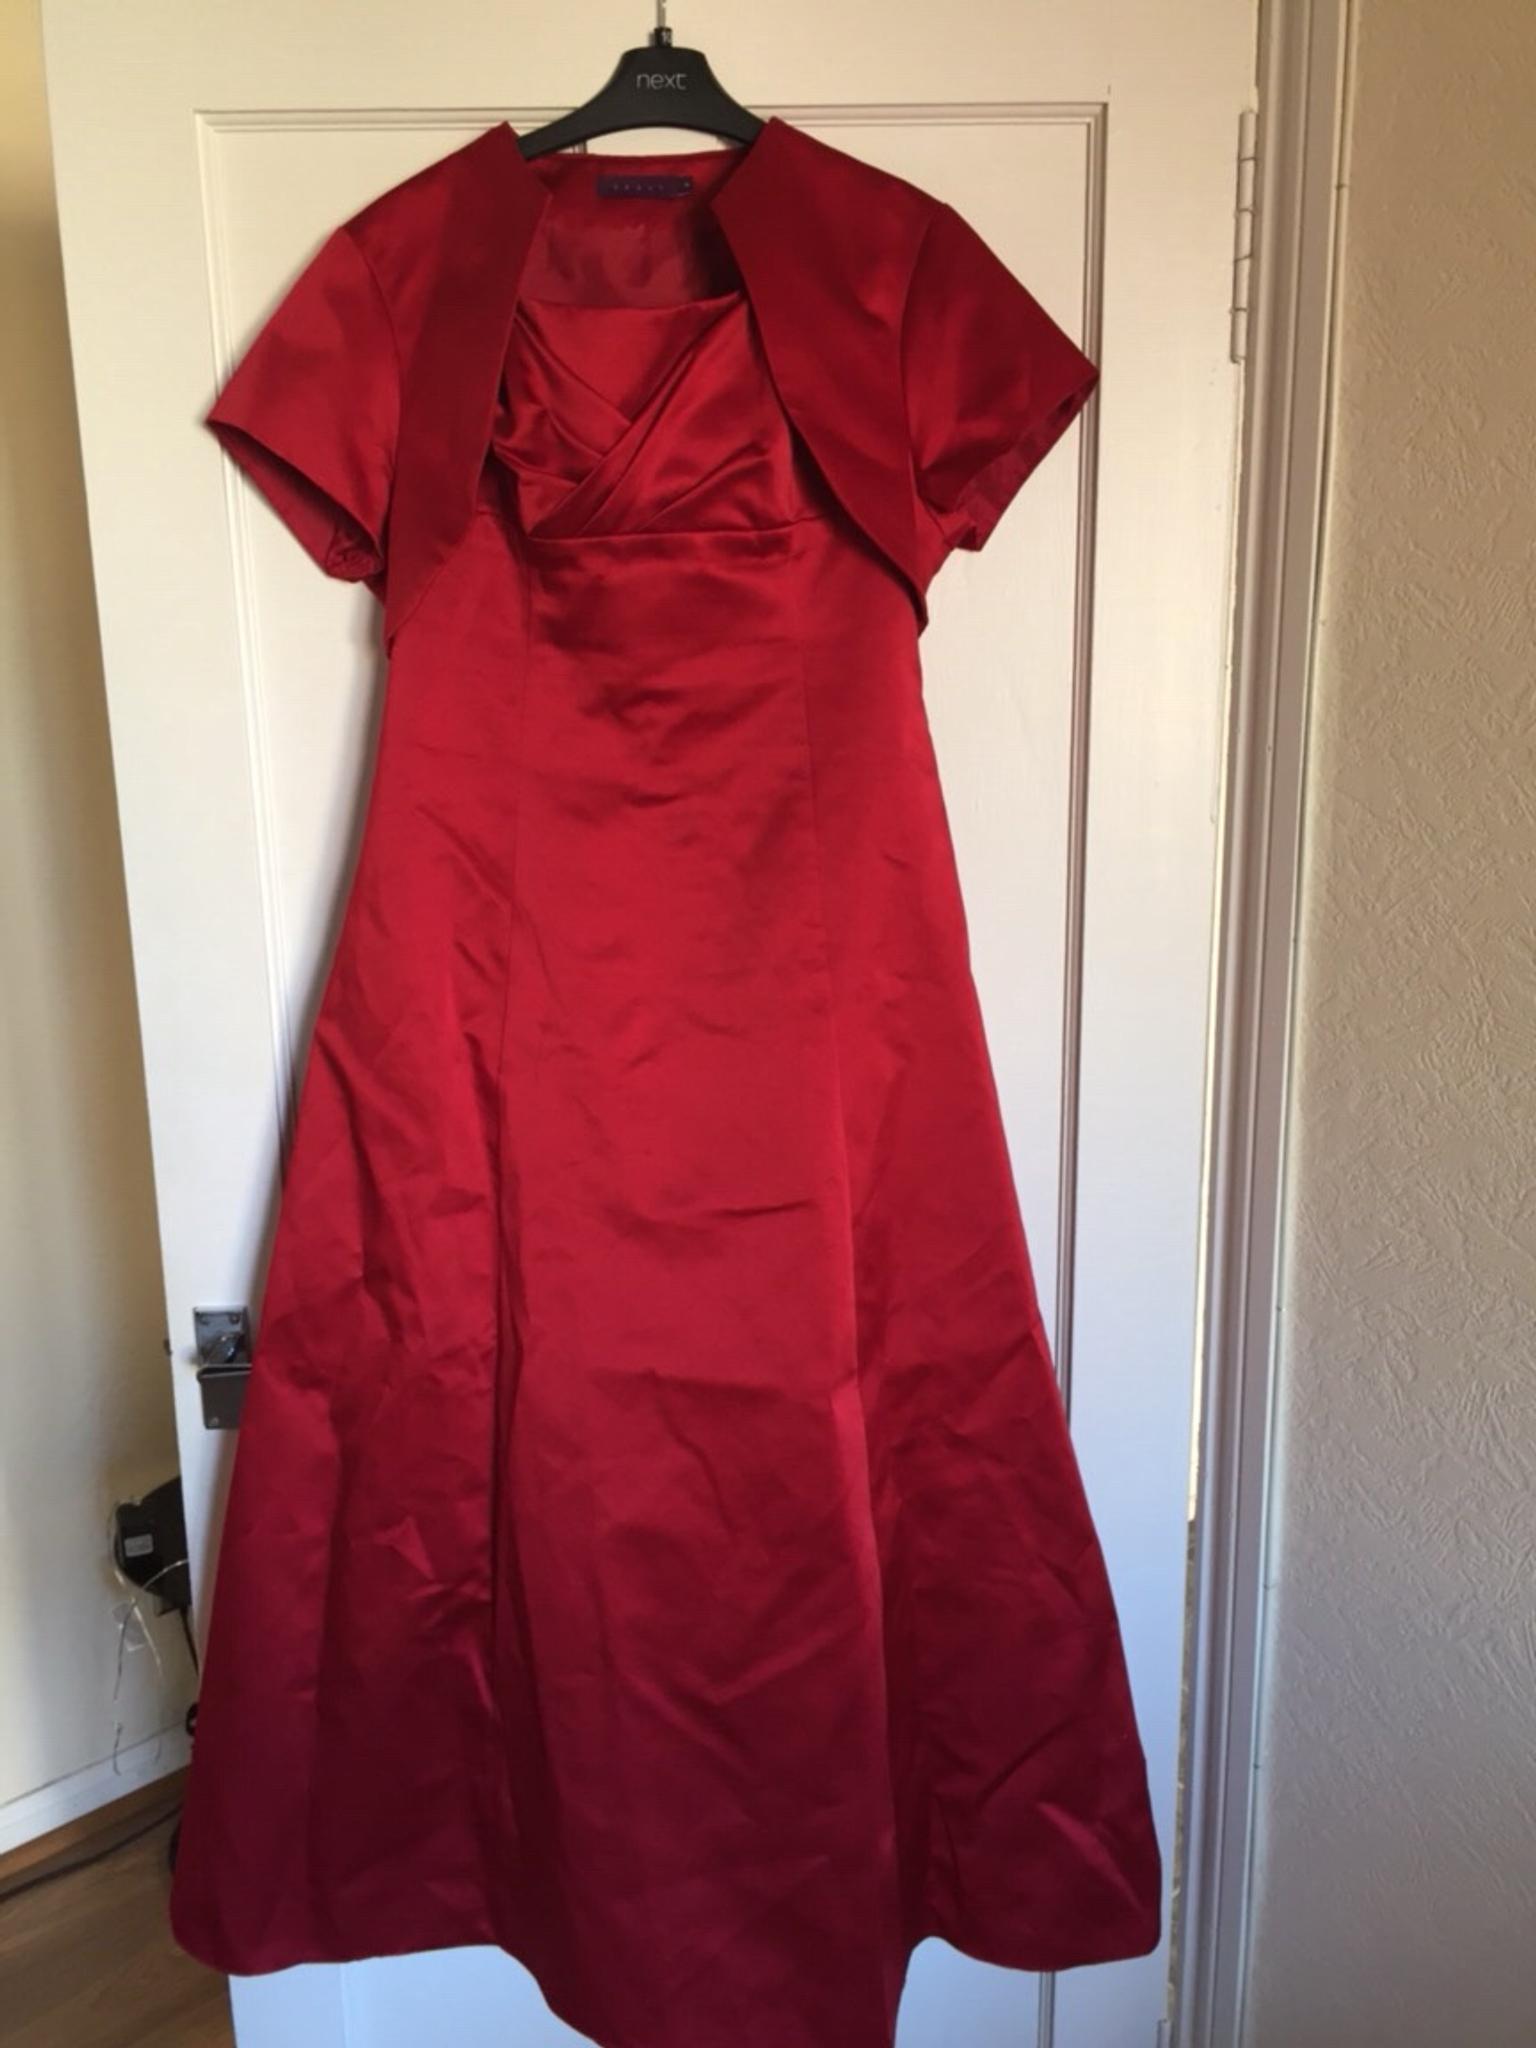 debenhams red sparkly dress